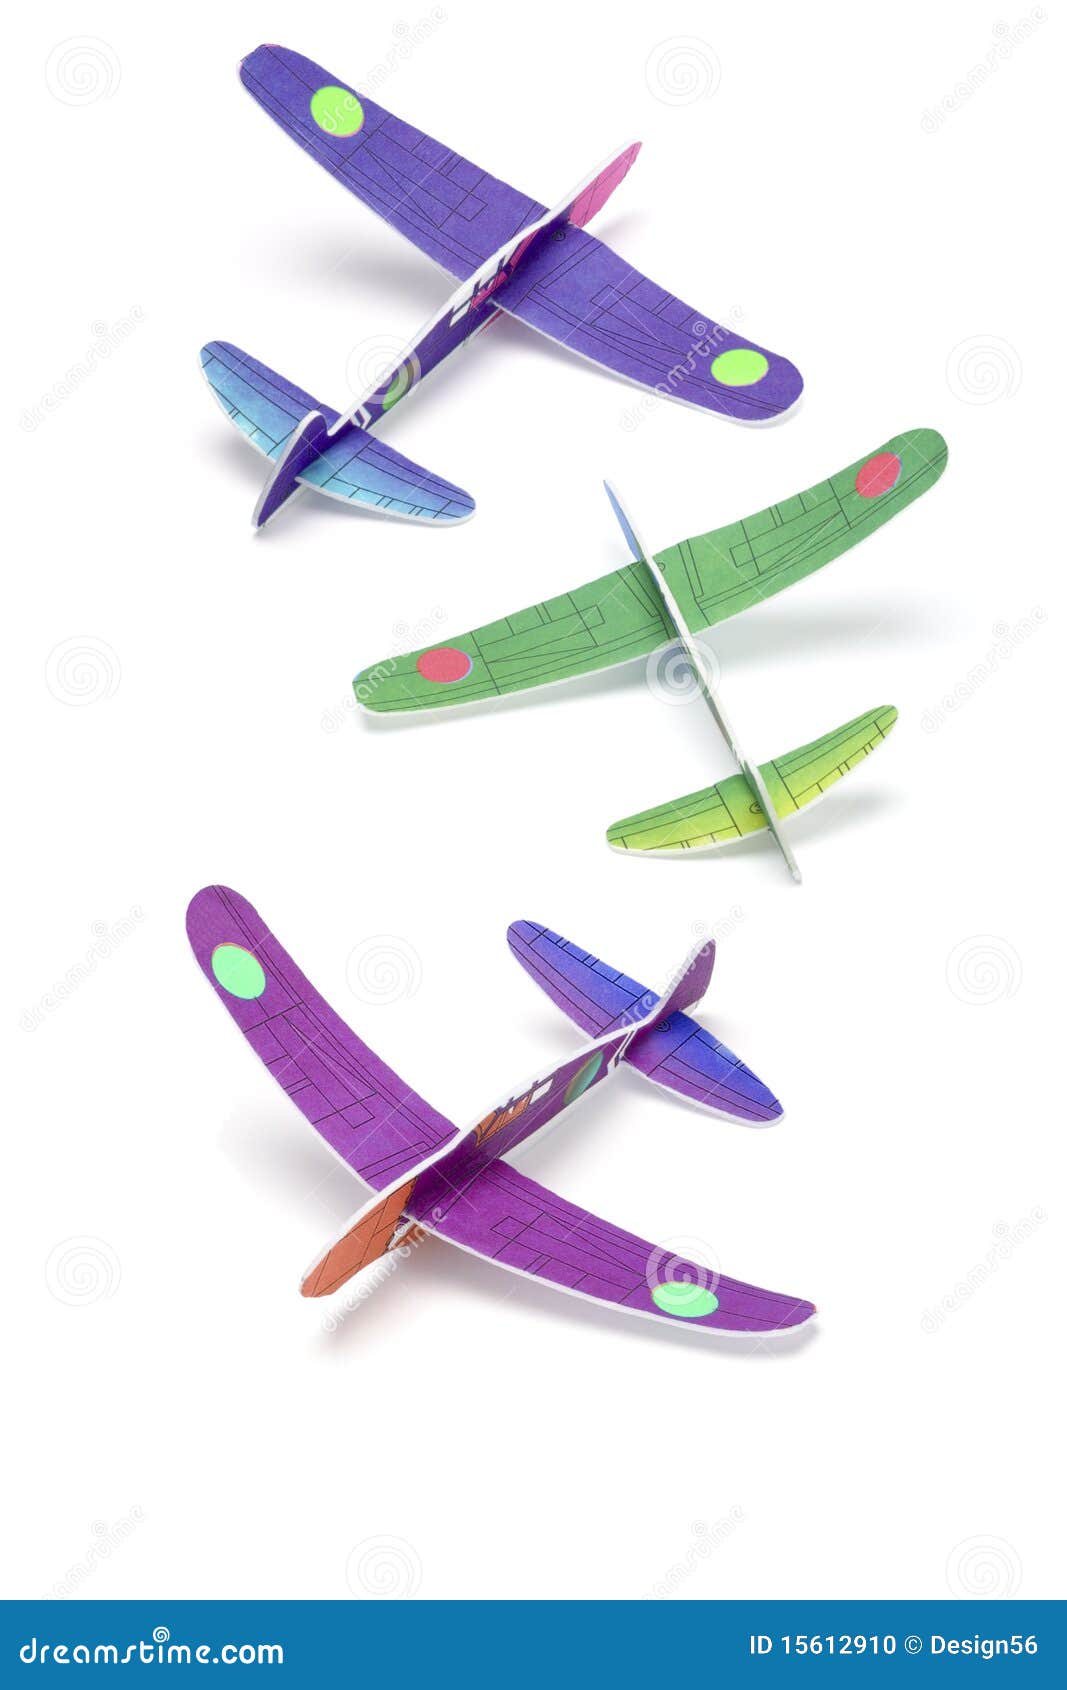 colorful styrofoam toy planes